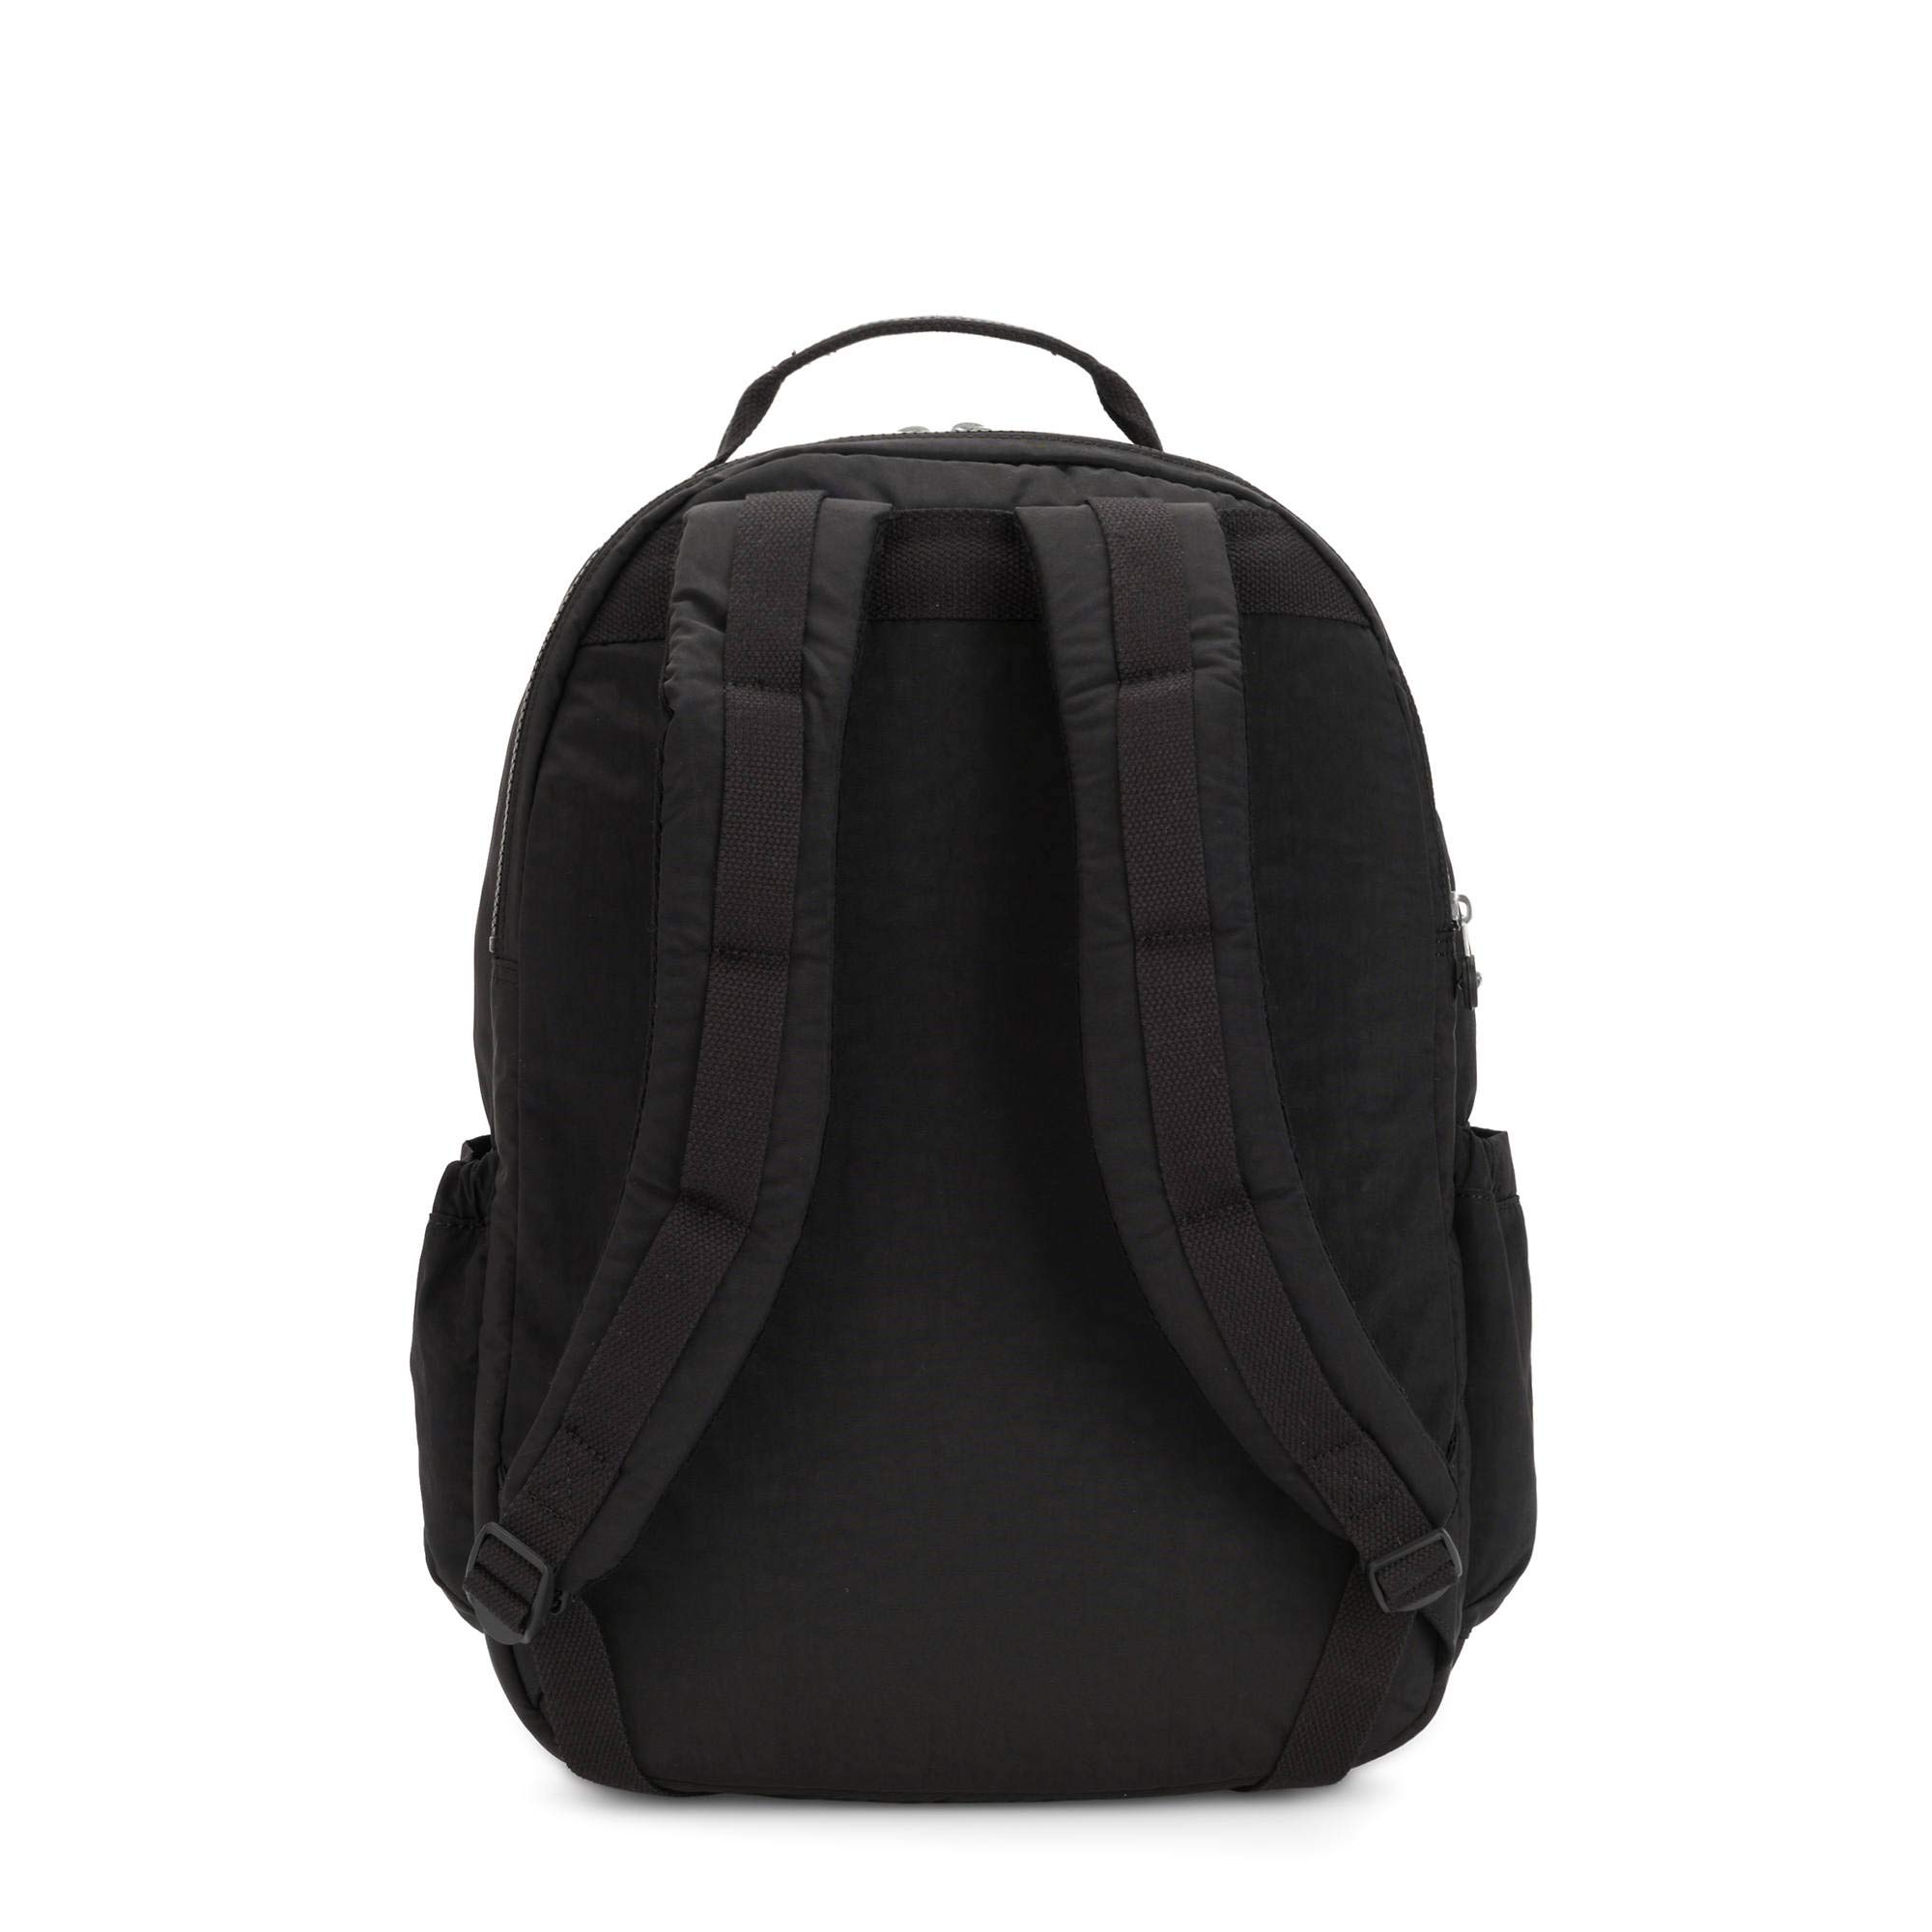 Kipling Women's Seoul Extra Large 17” Laptop Backpack, Durable, Roomy with Padded Shoulder Straps, Bag, True Black 2, 13.5